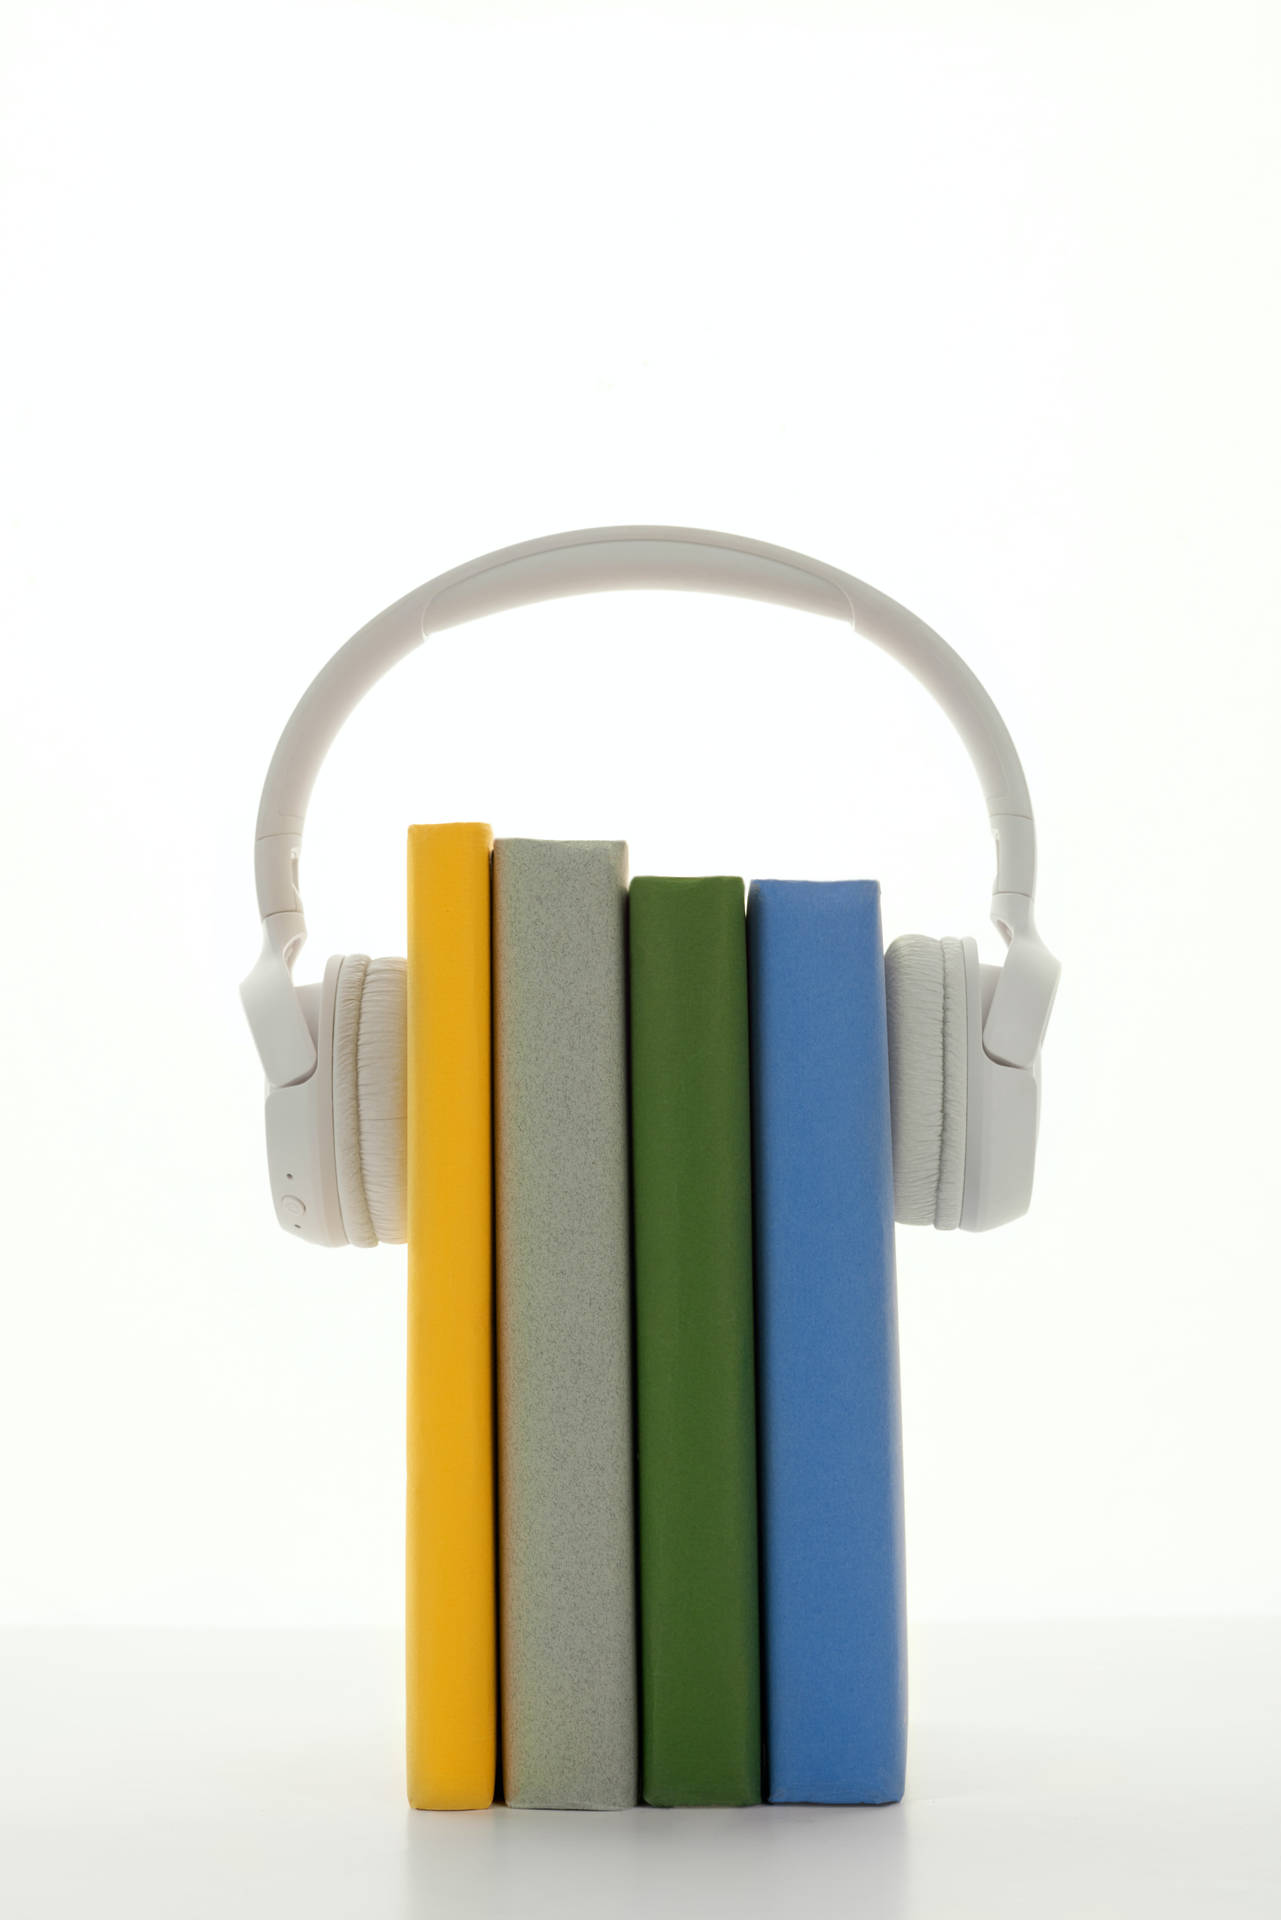 Study Motivation Books And Headphones Background